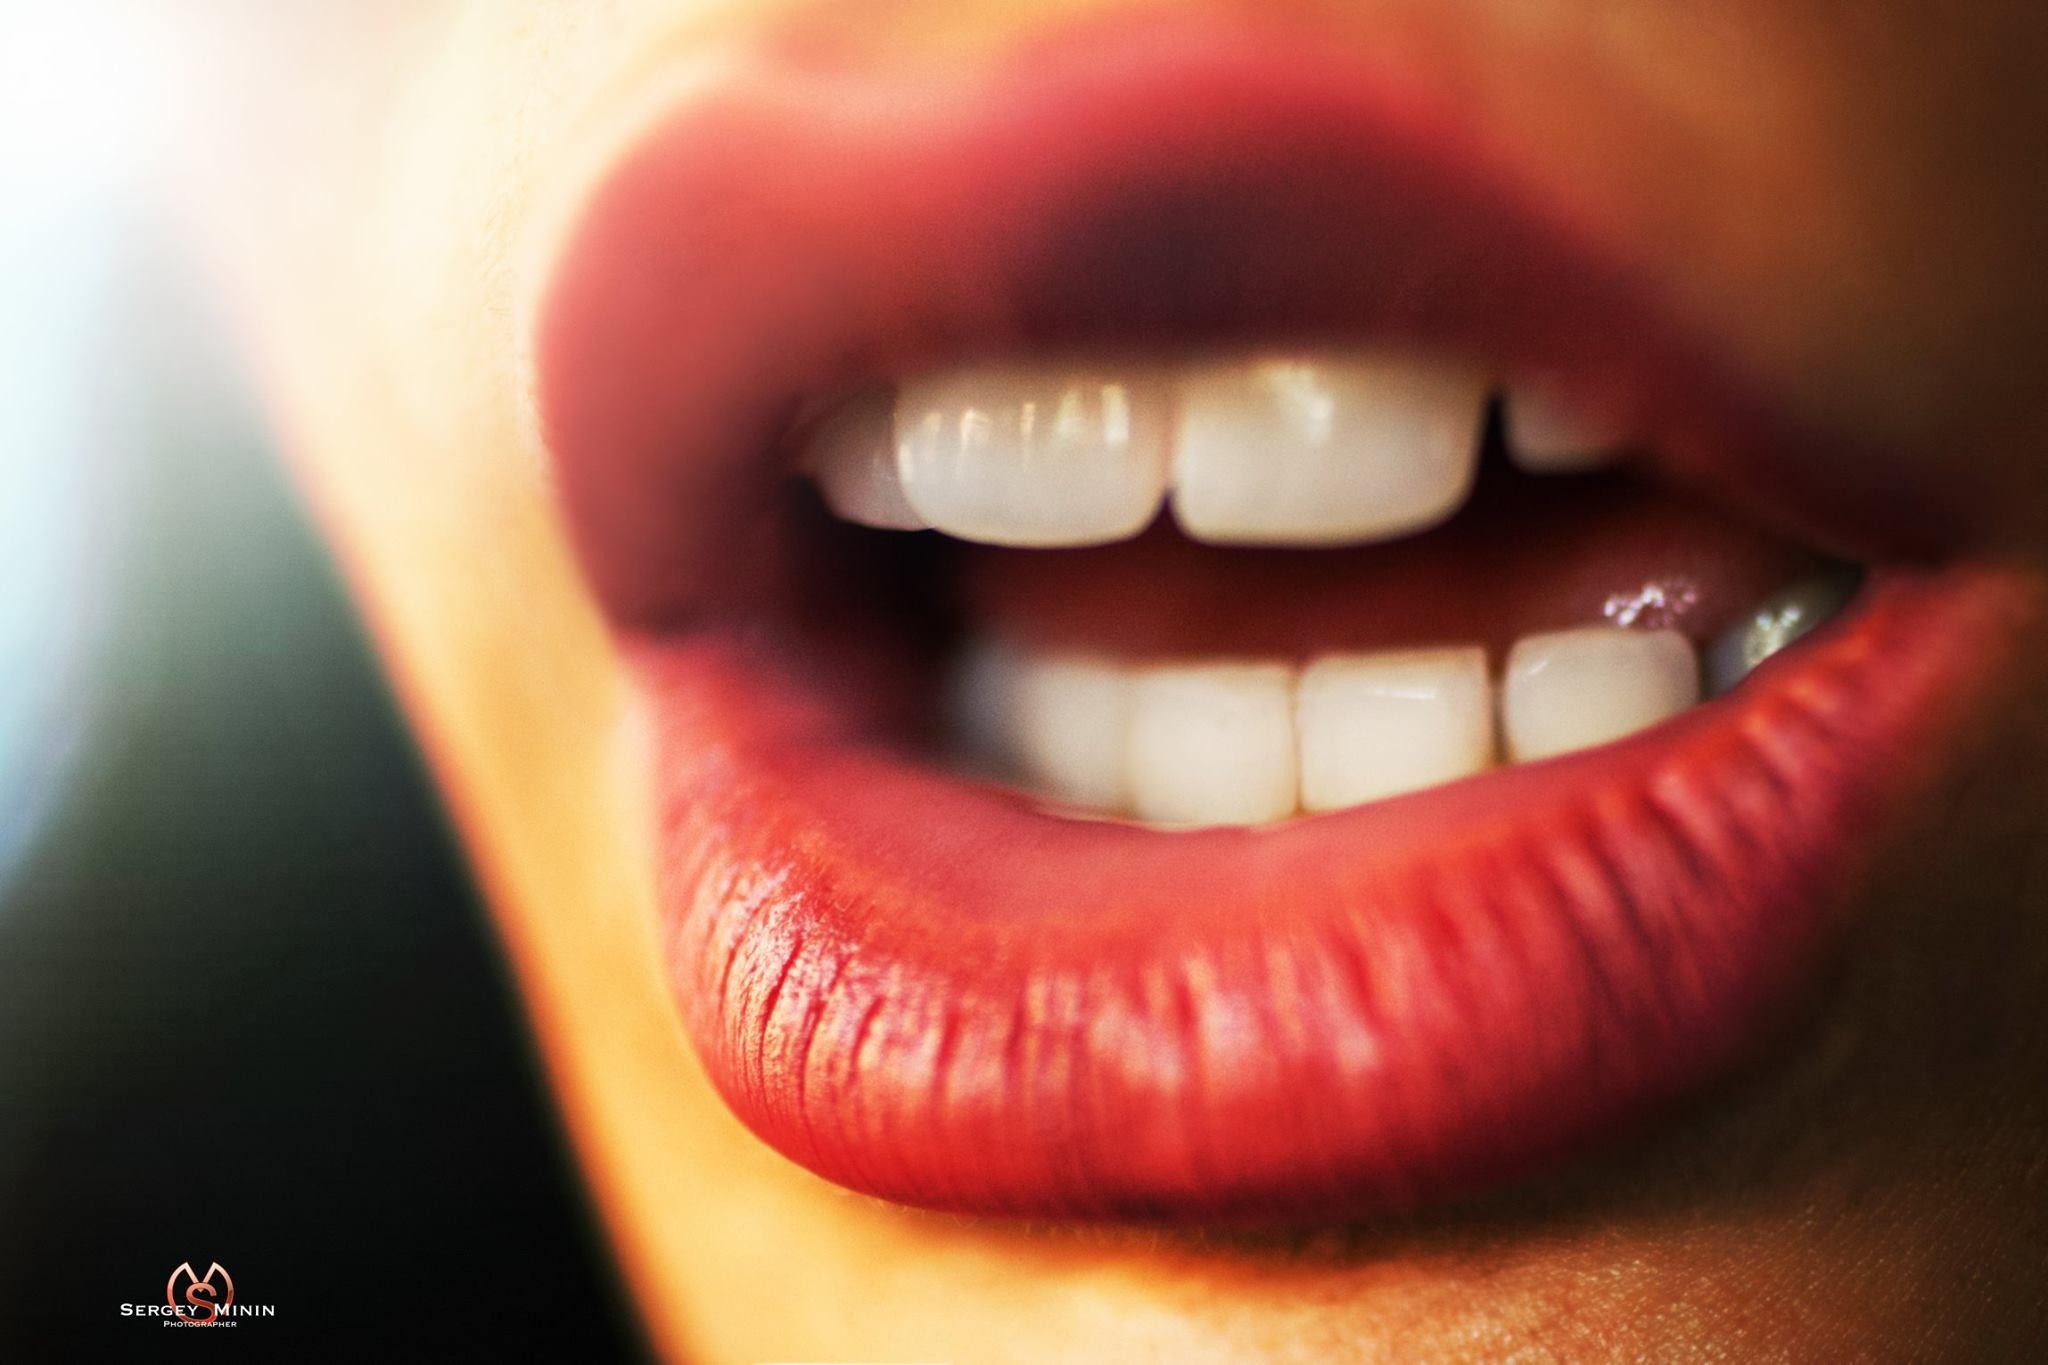 People 2048x1365 open mouth women mouth macro closeup teeth red lipstick Sergey Minin model